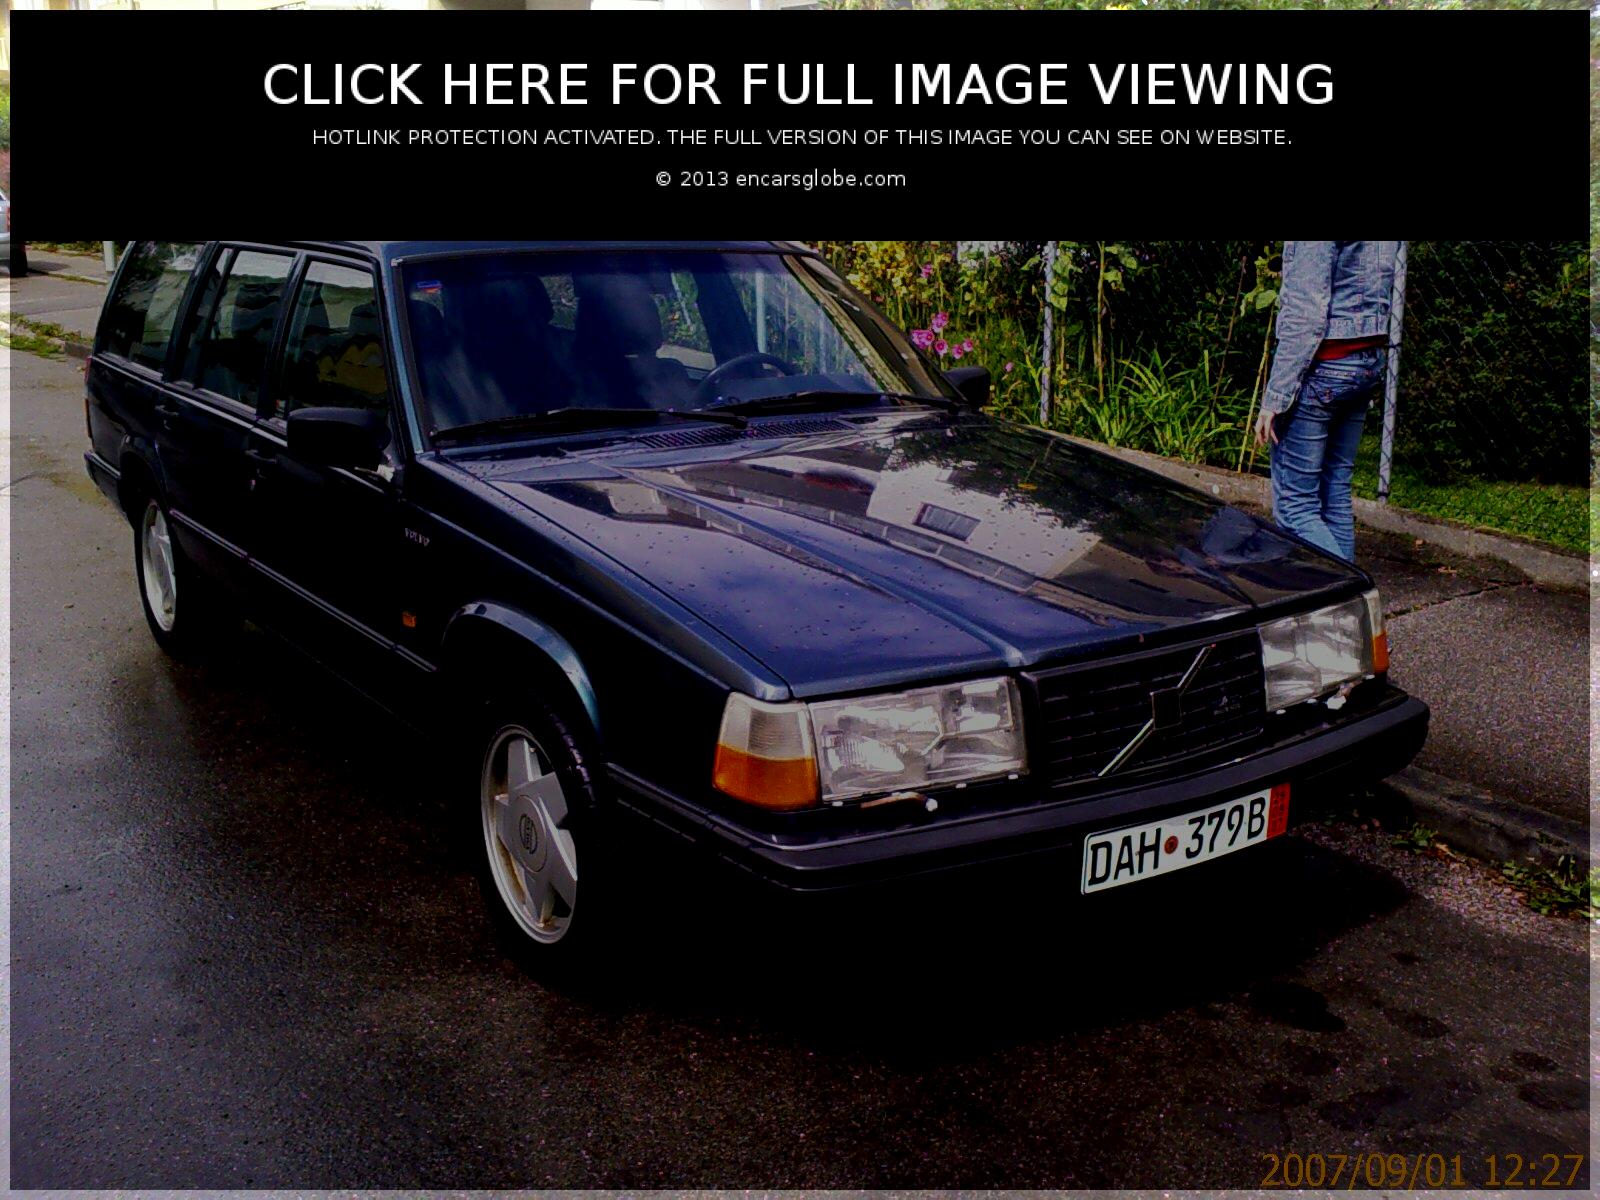 Modèle : Volvo 94